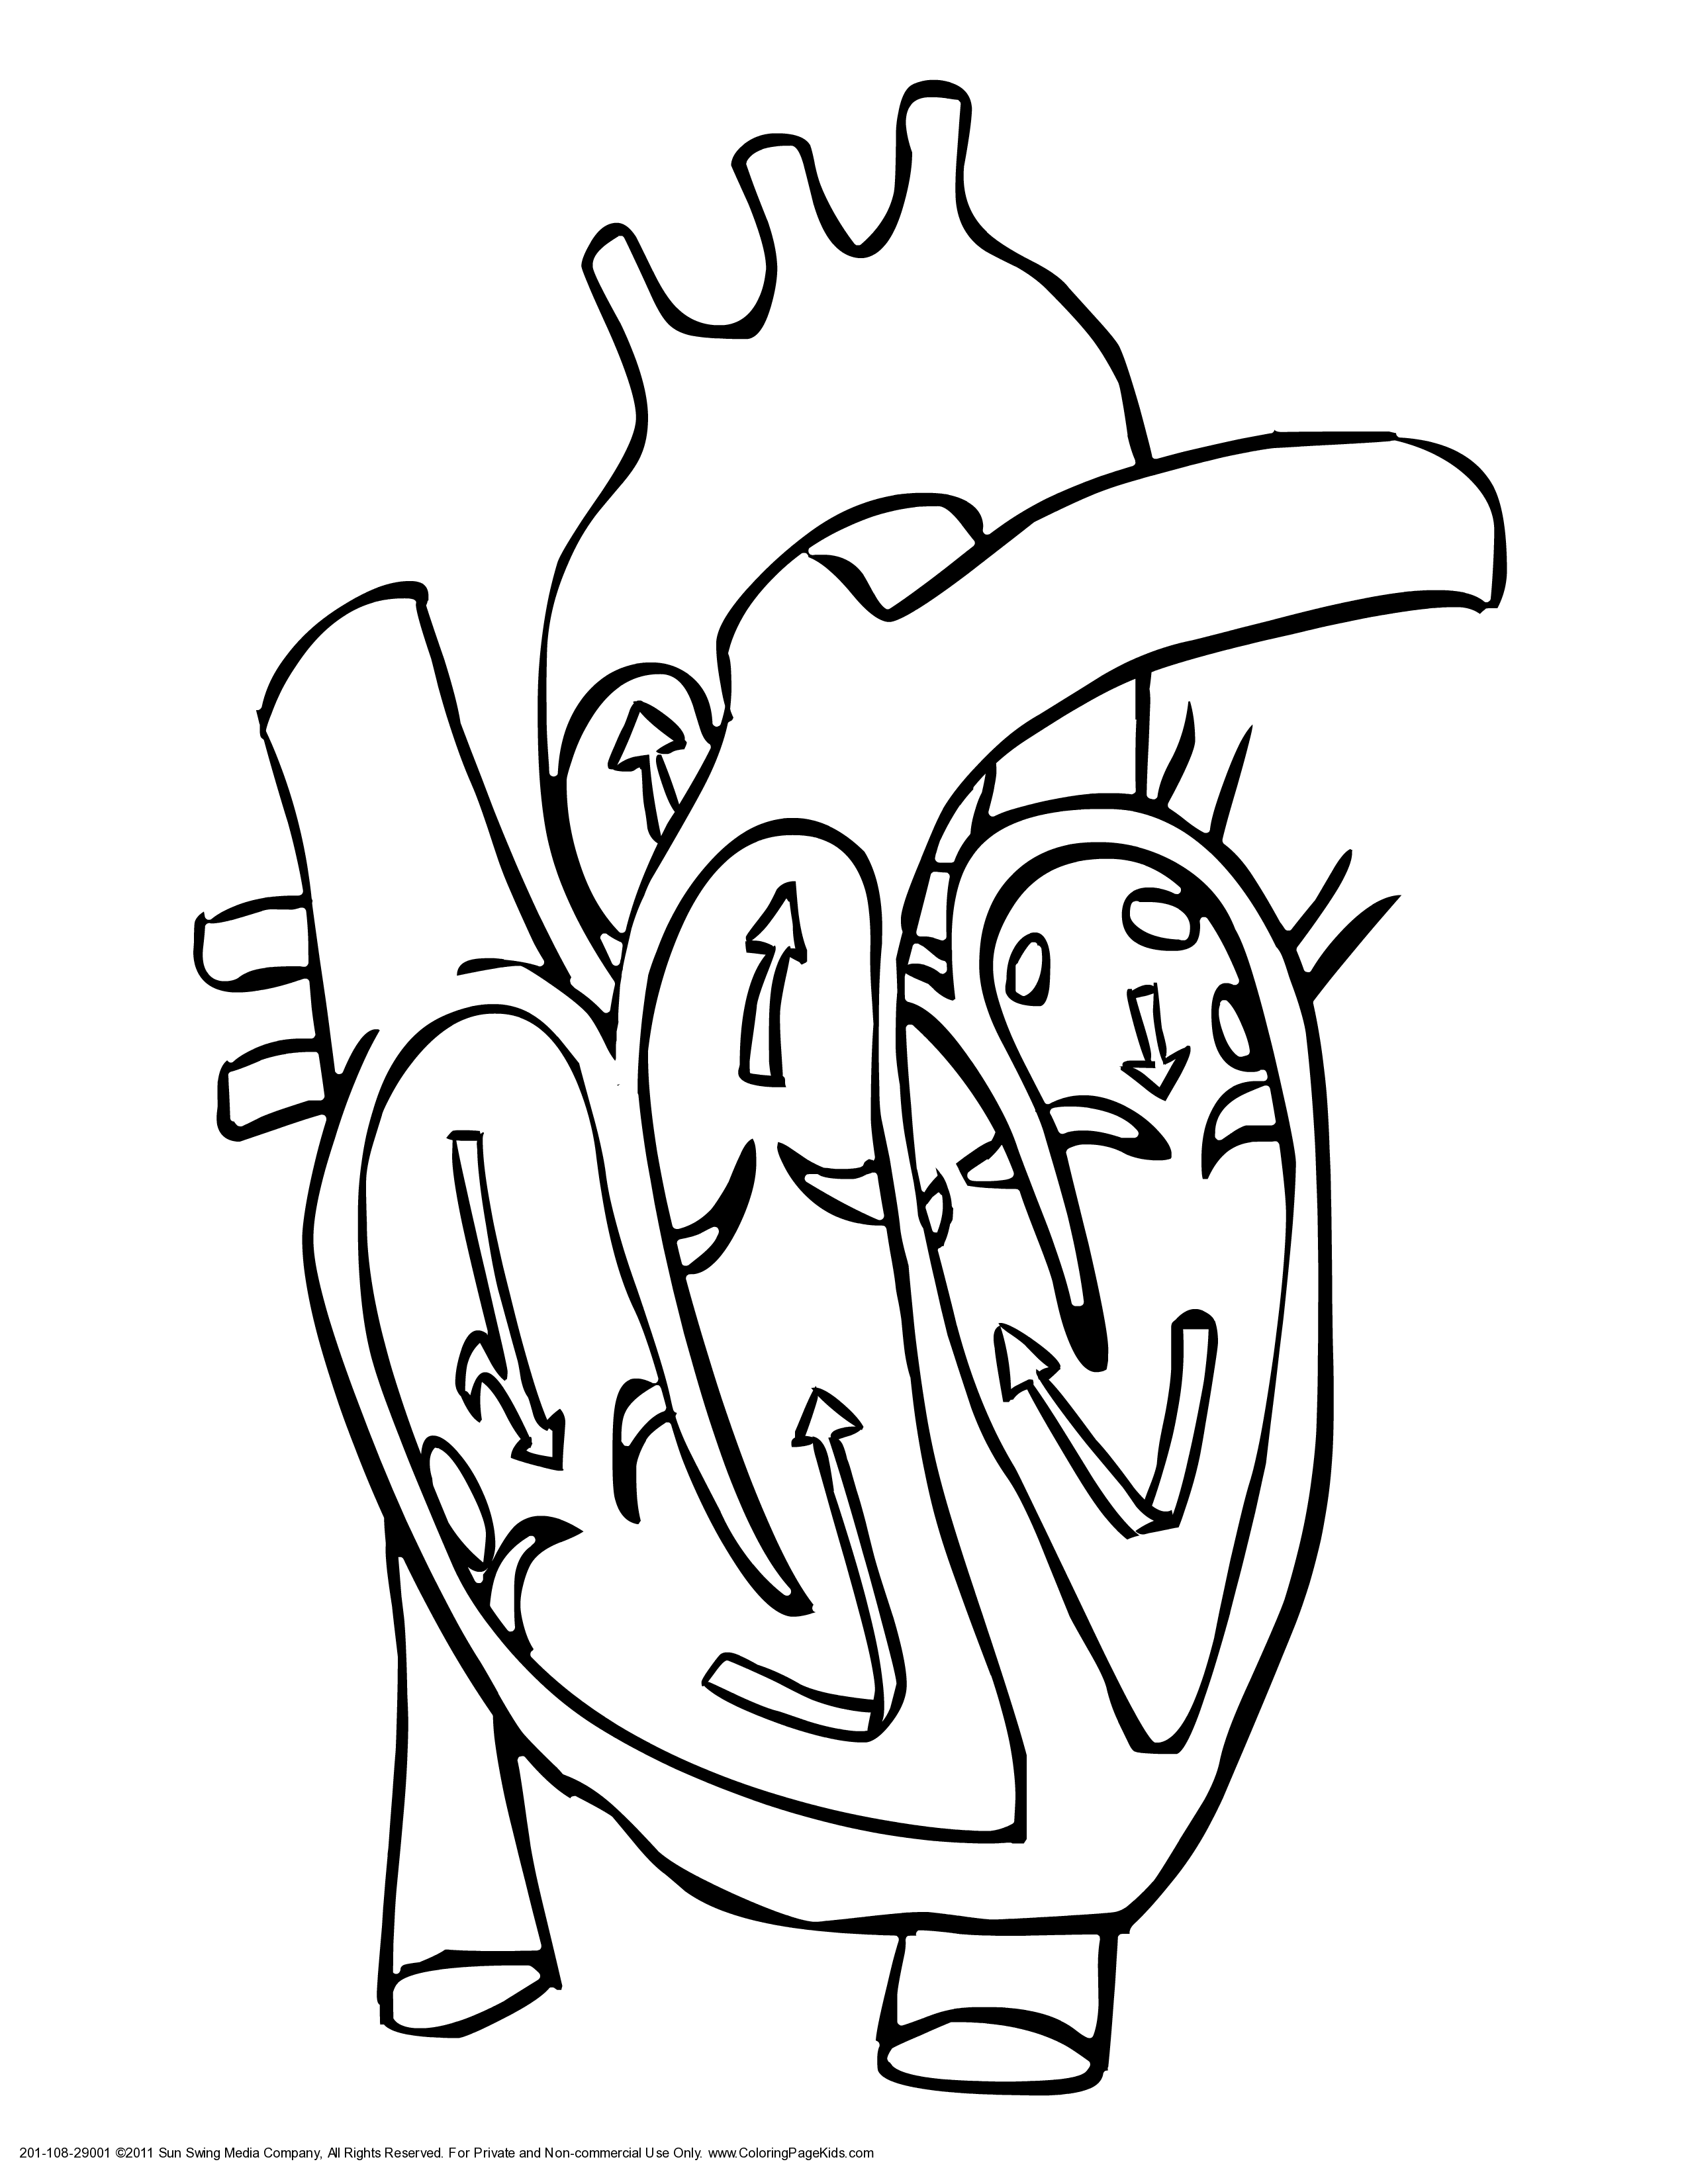 Heart diagram clipart